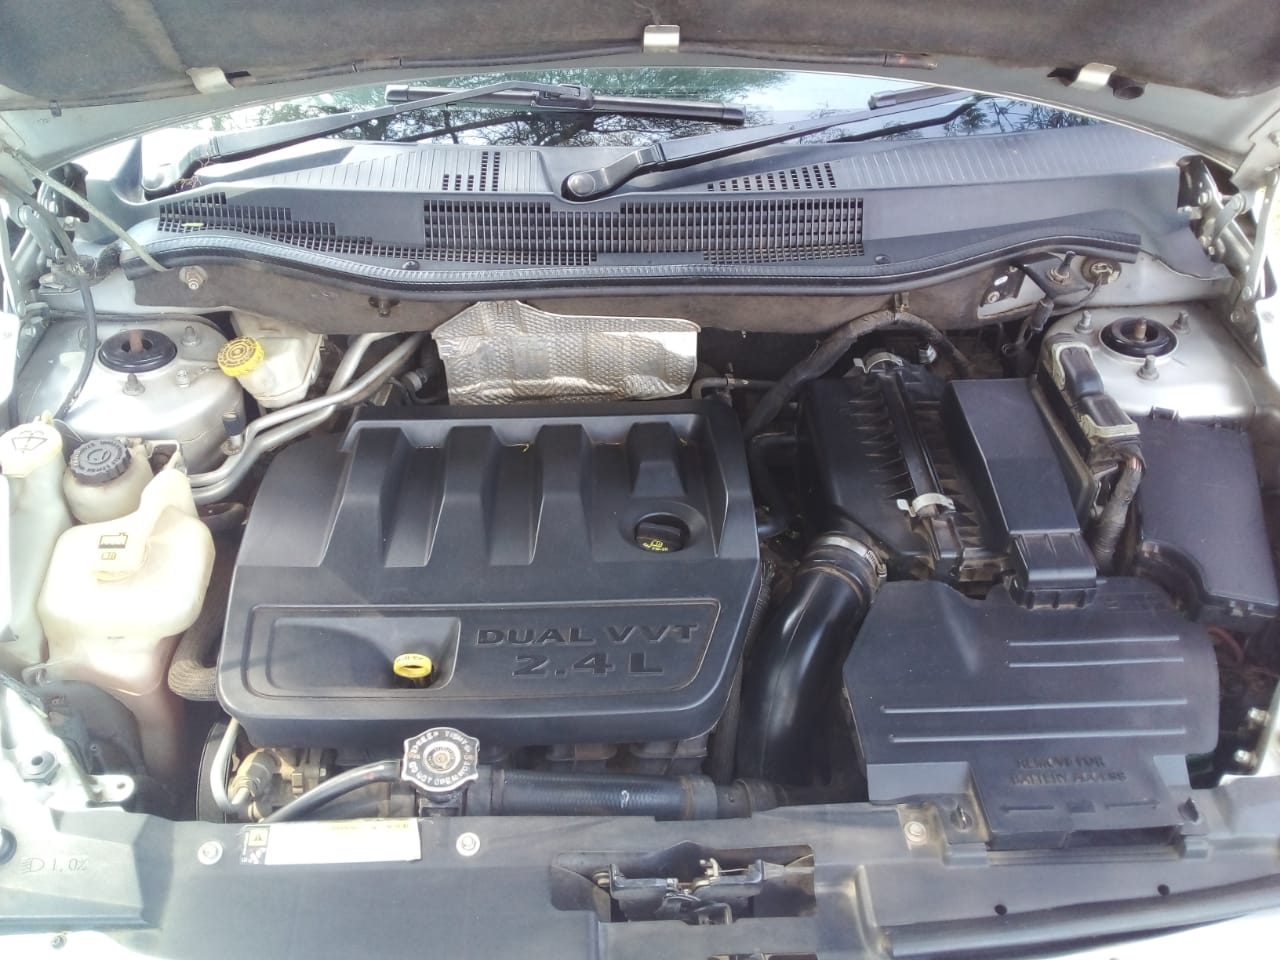 Dodge Caliber SXT 2.4 L petrol. 2010 model. Good running condition. Start and go